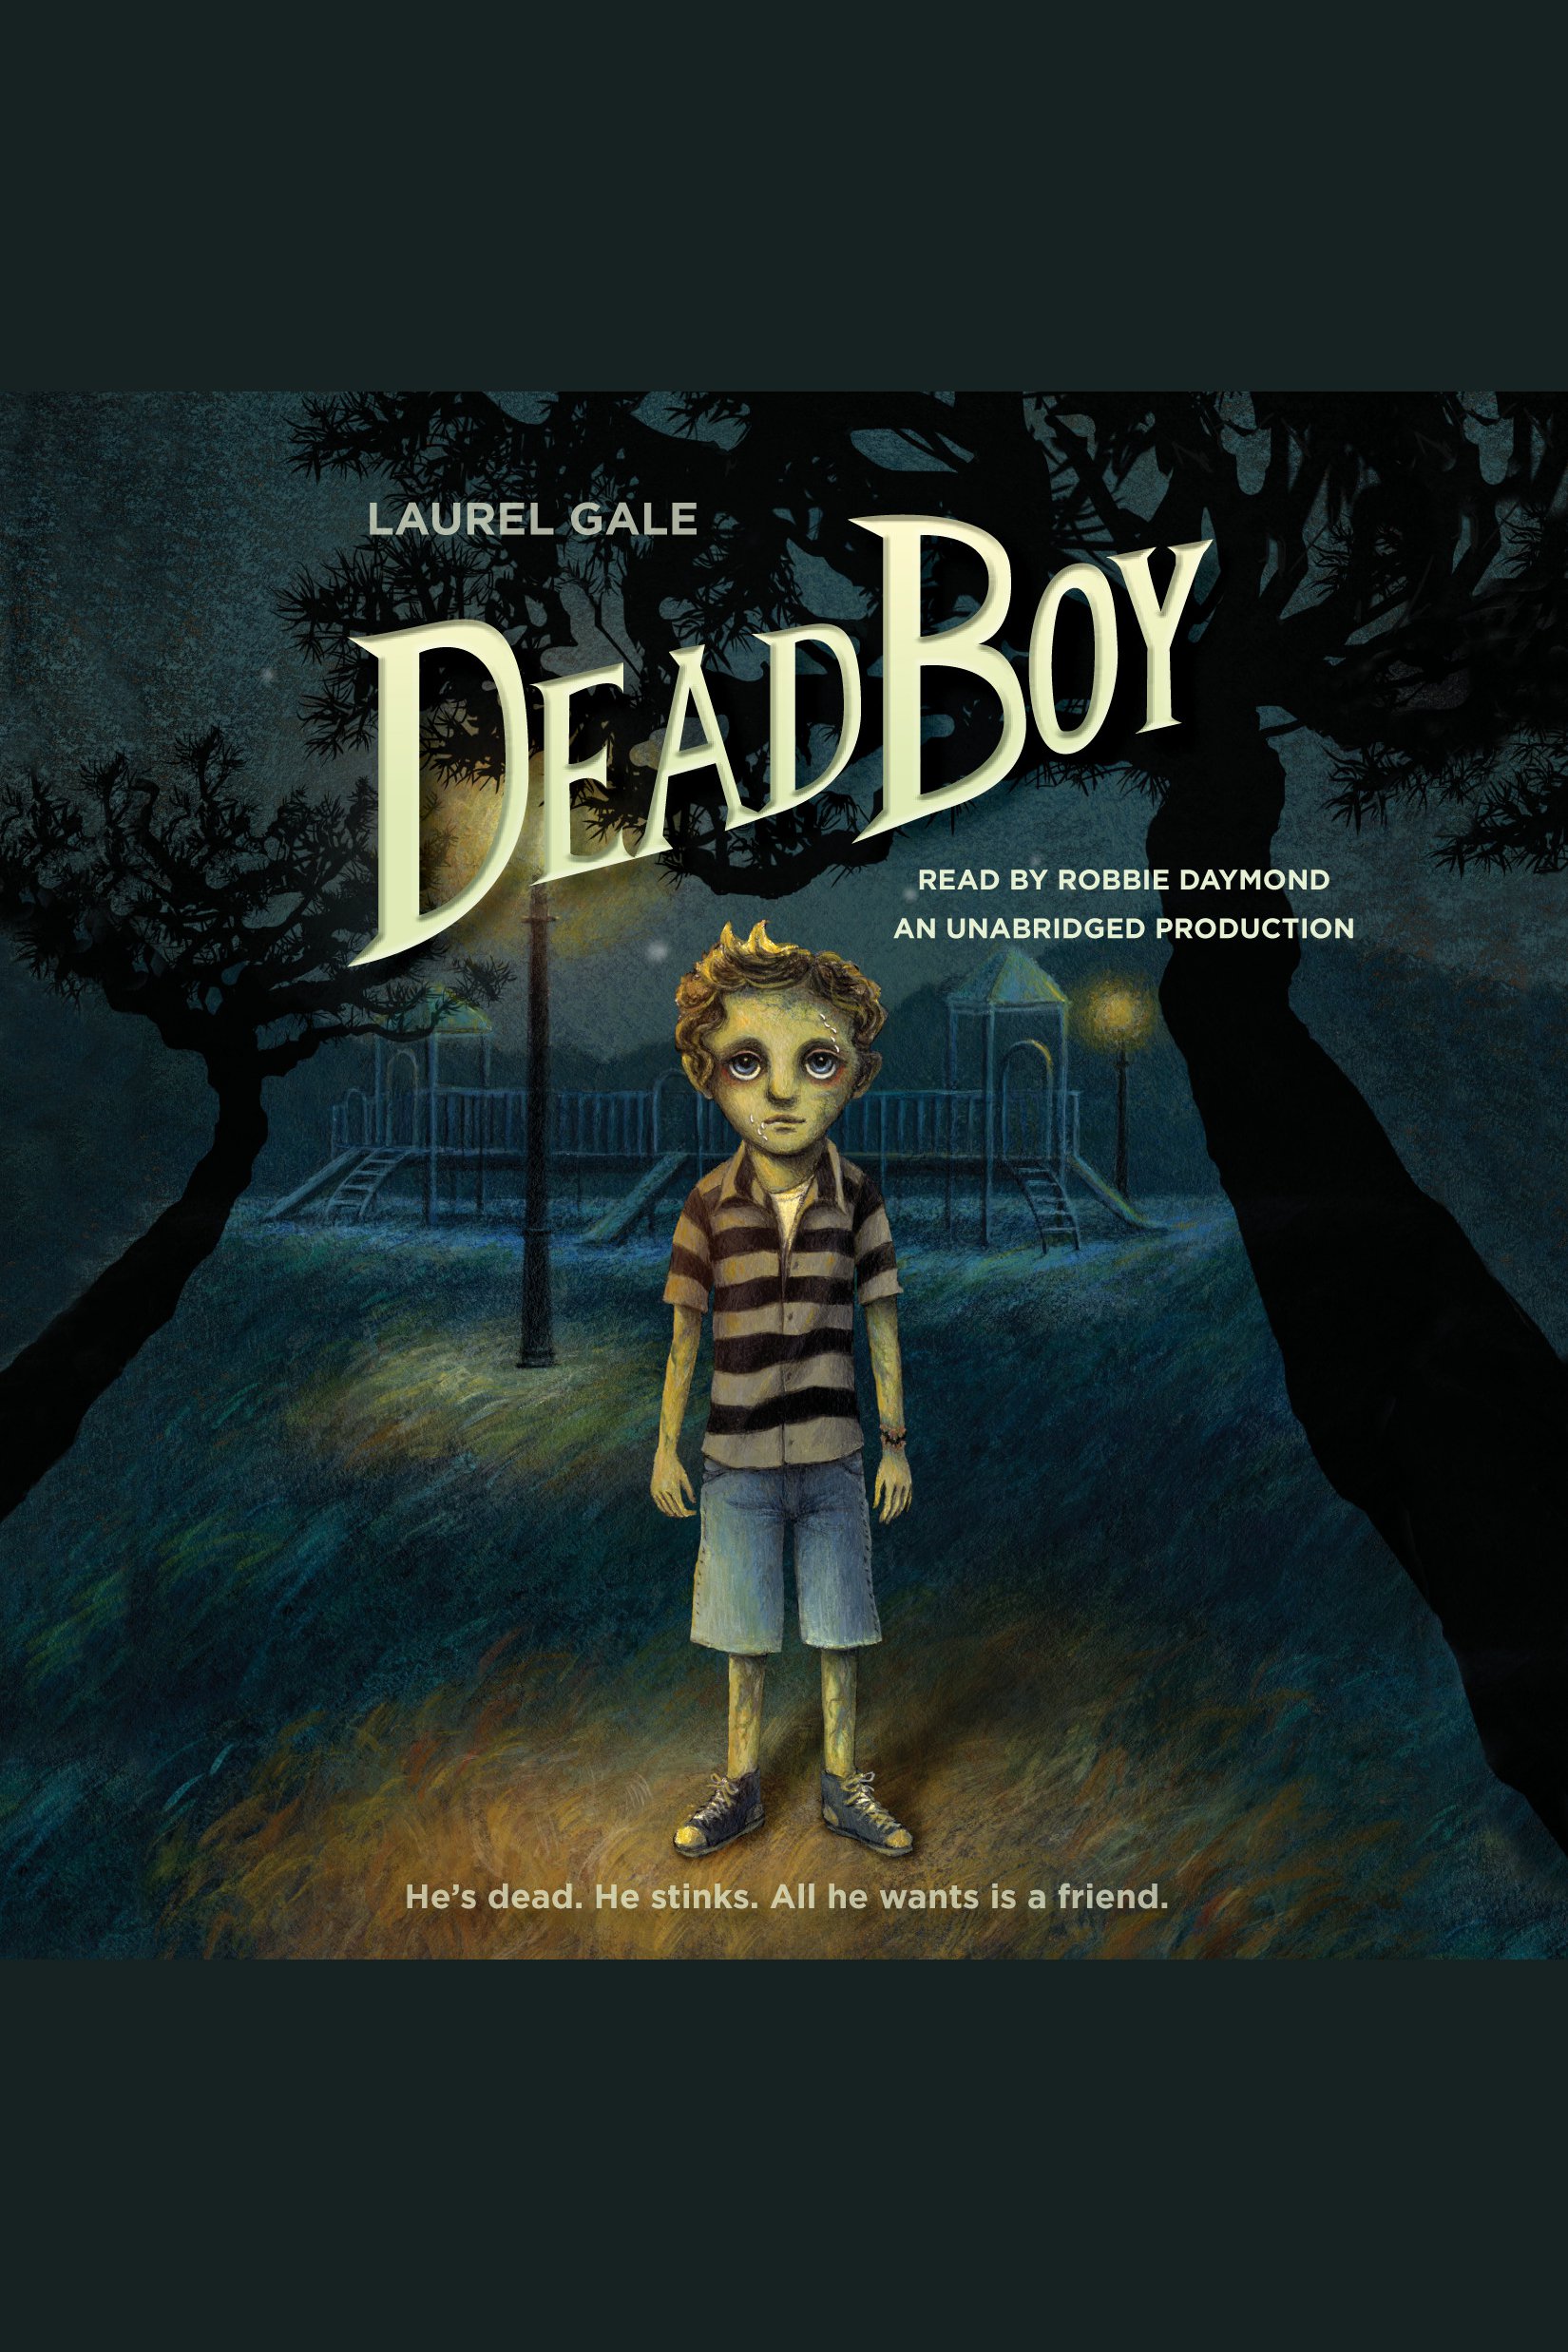 Dead boy cover image